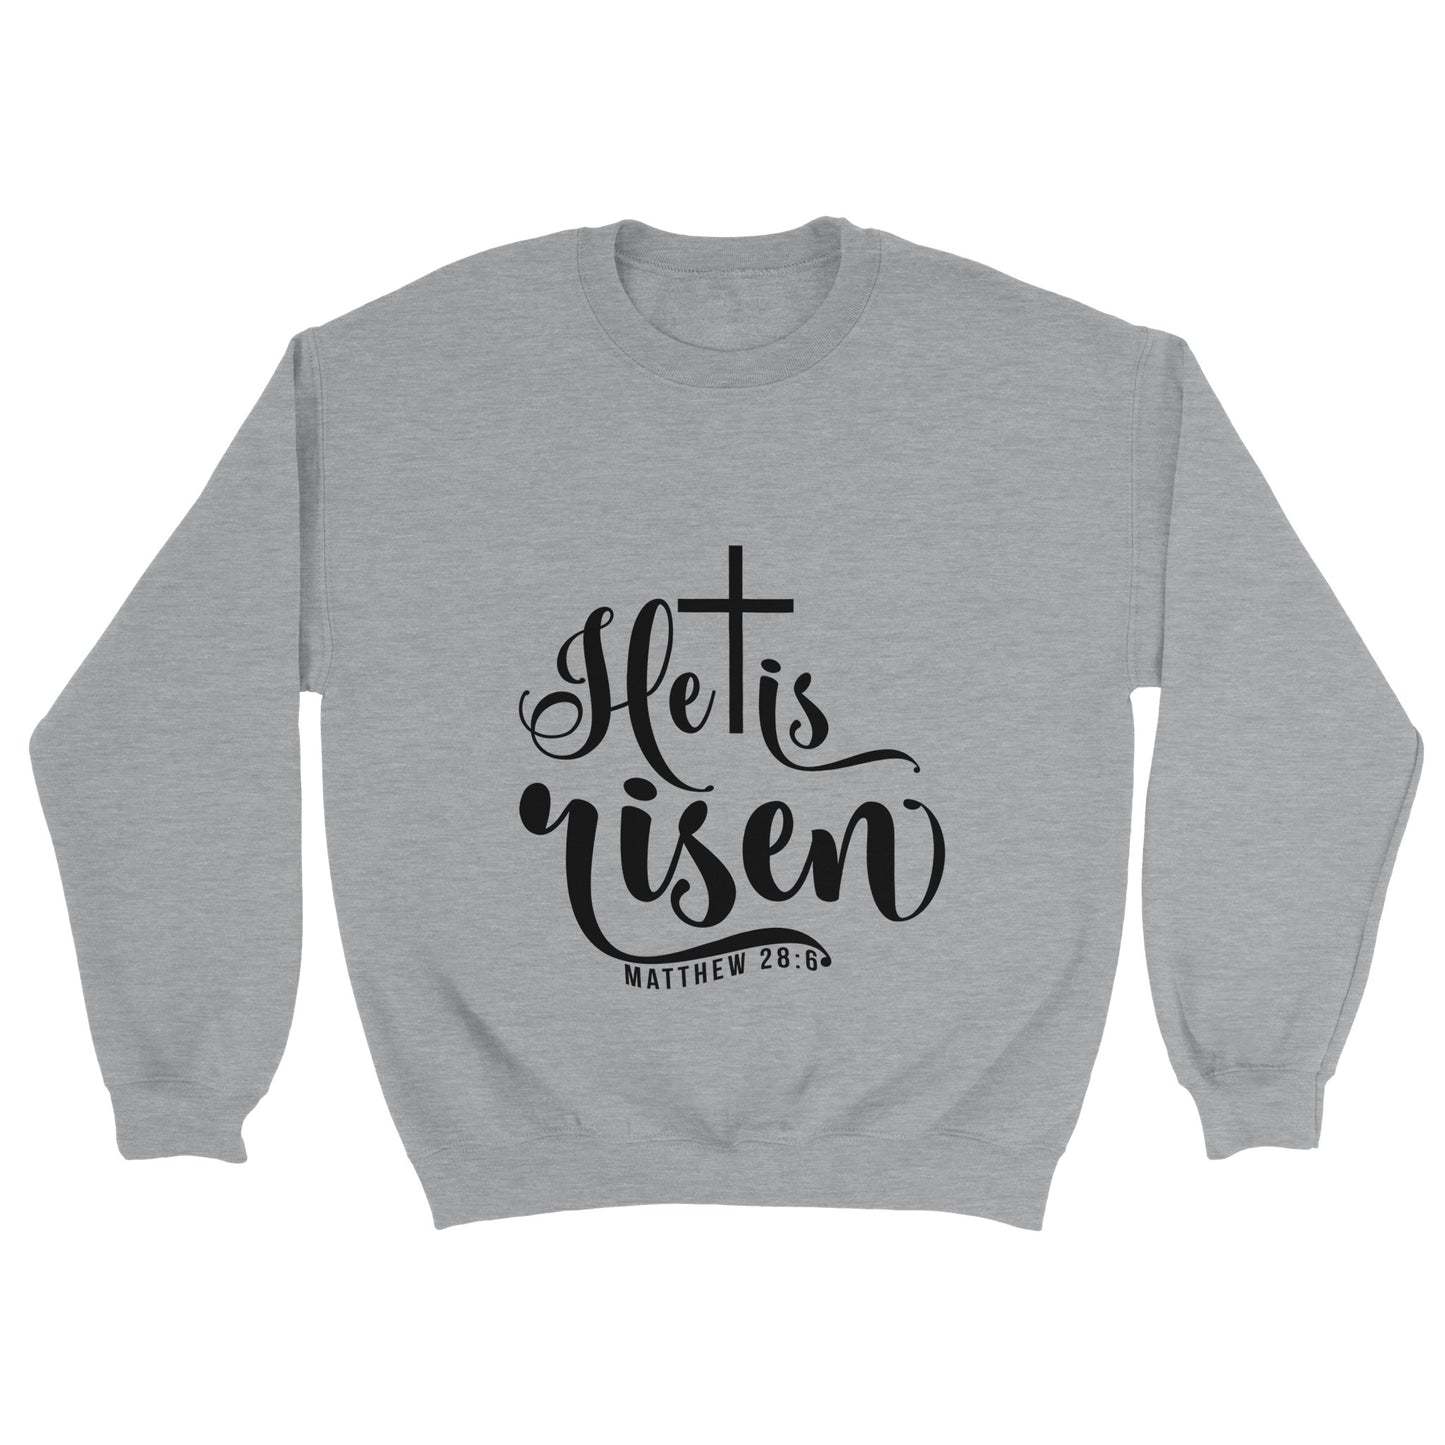 He is Risen (Matthew 20:6) - Classic Unisex Crewneck Sweatshirt